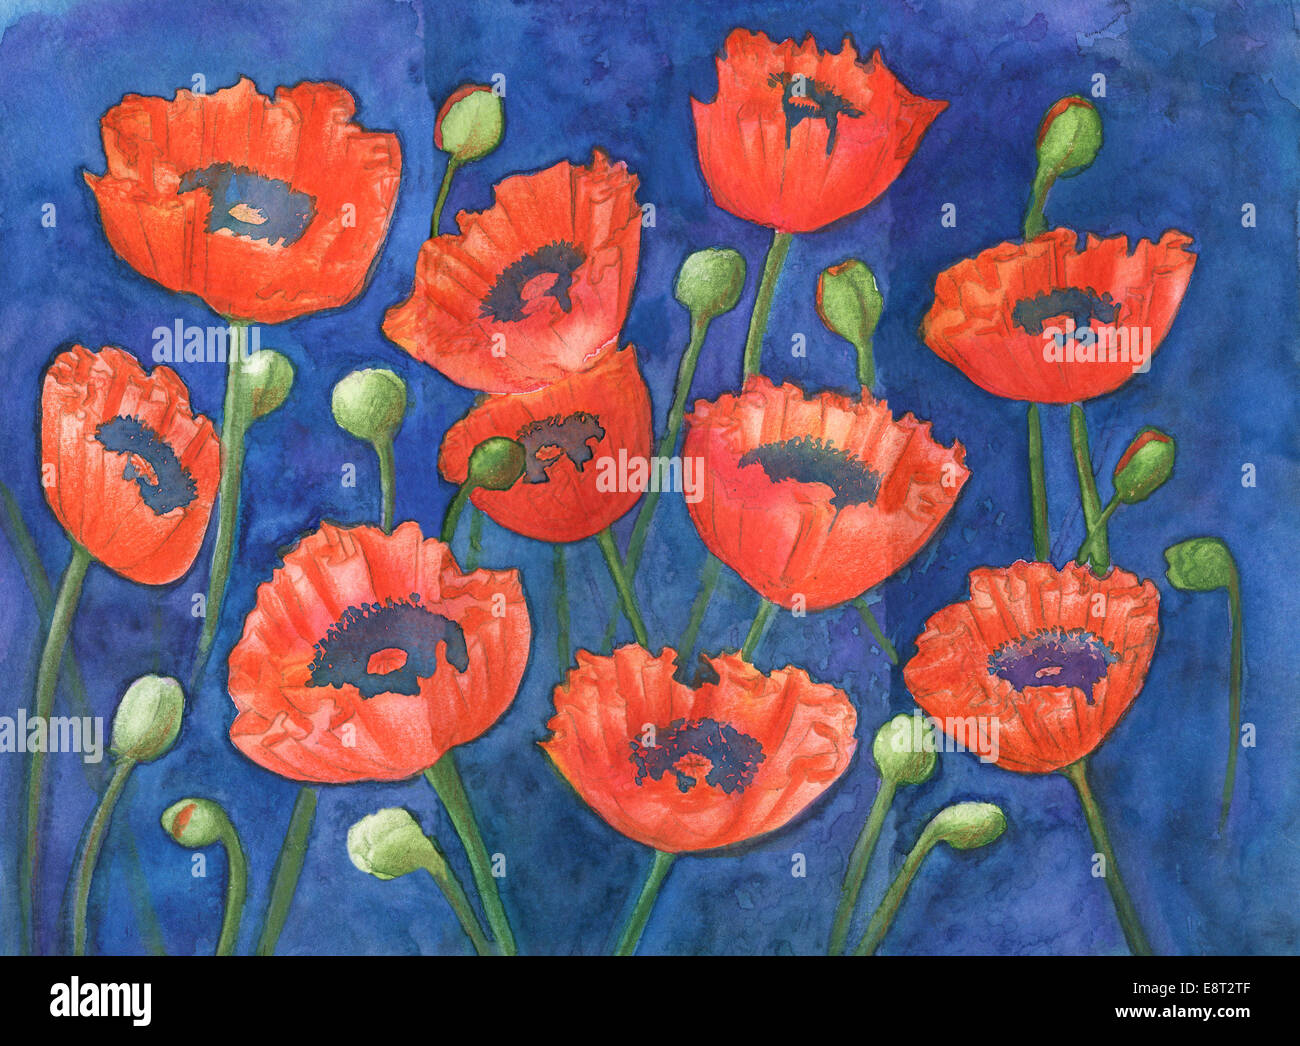 Rote Mohnblumen und grüne Knospen auf blau, original Aquarell und Gouache Malerei Stockfoto